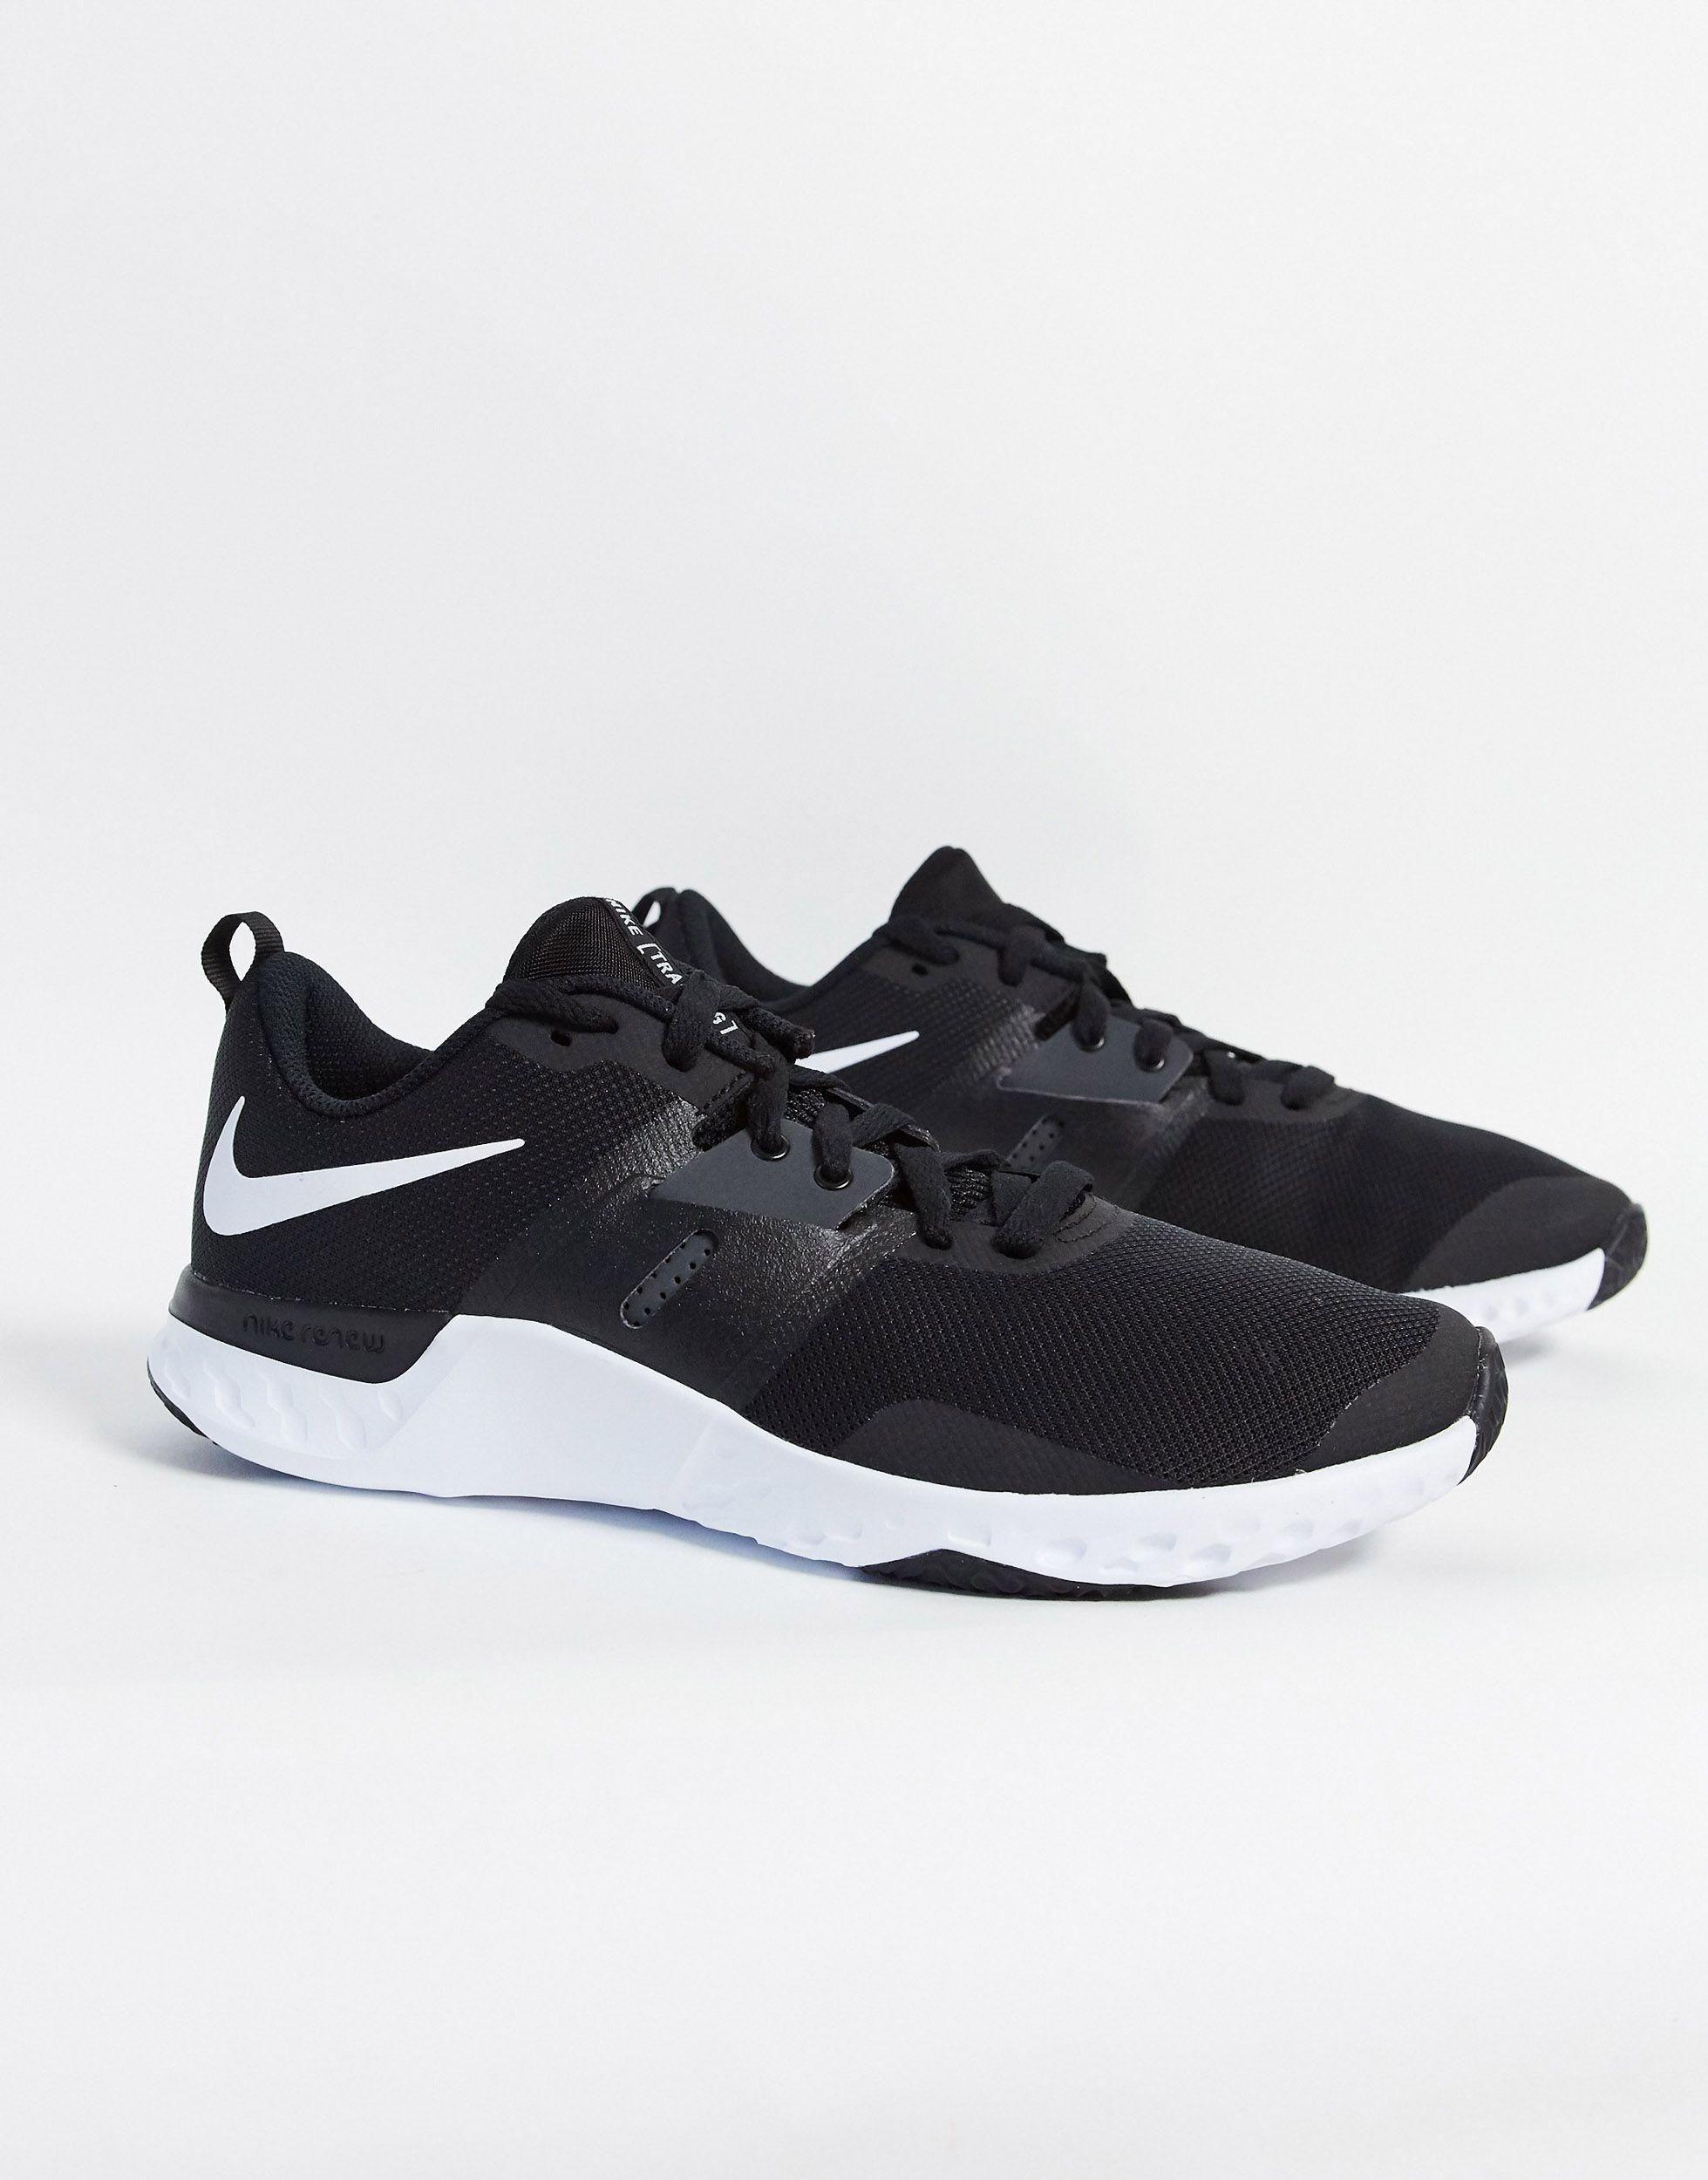 Nike Lace Renew Retaliation Tr 2 Training Shoes in Black/White (Black) for  Men - Lyst